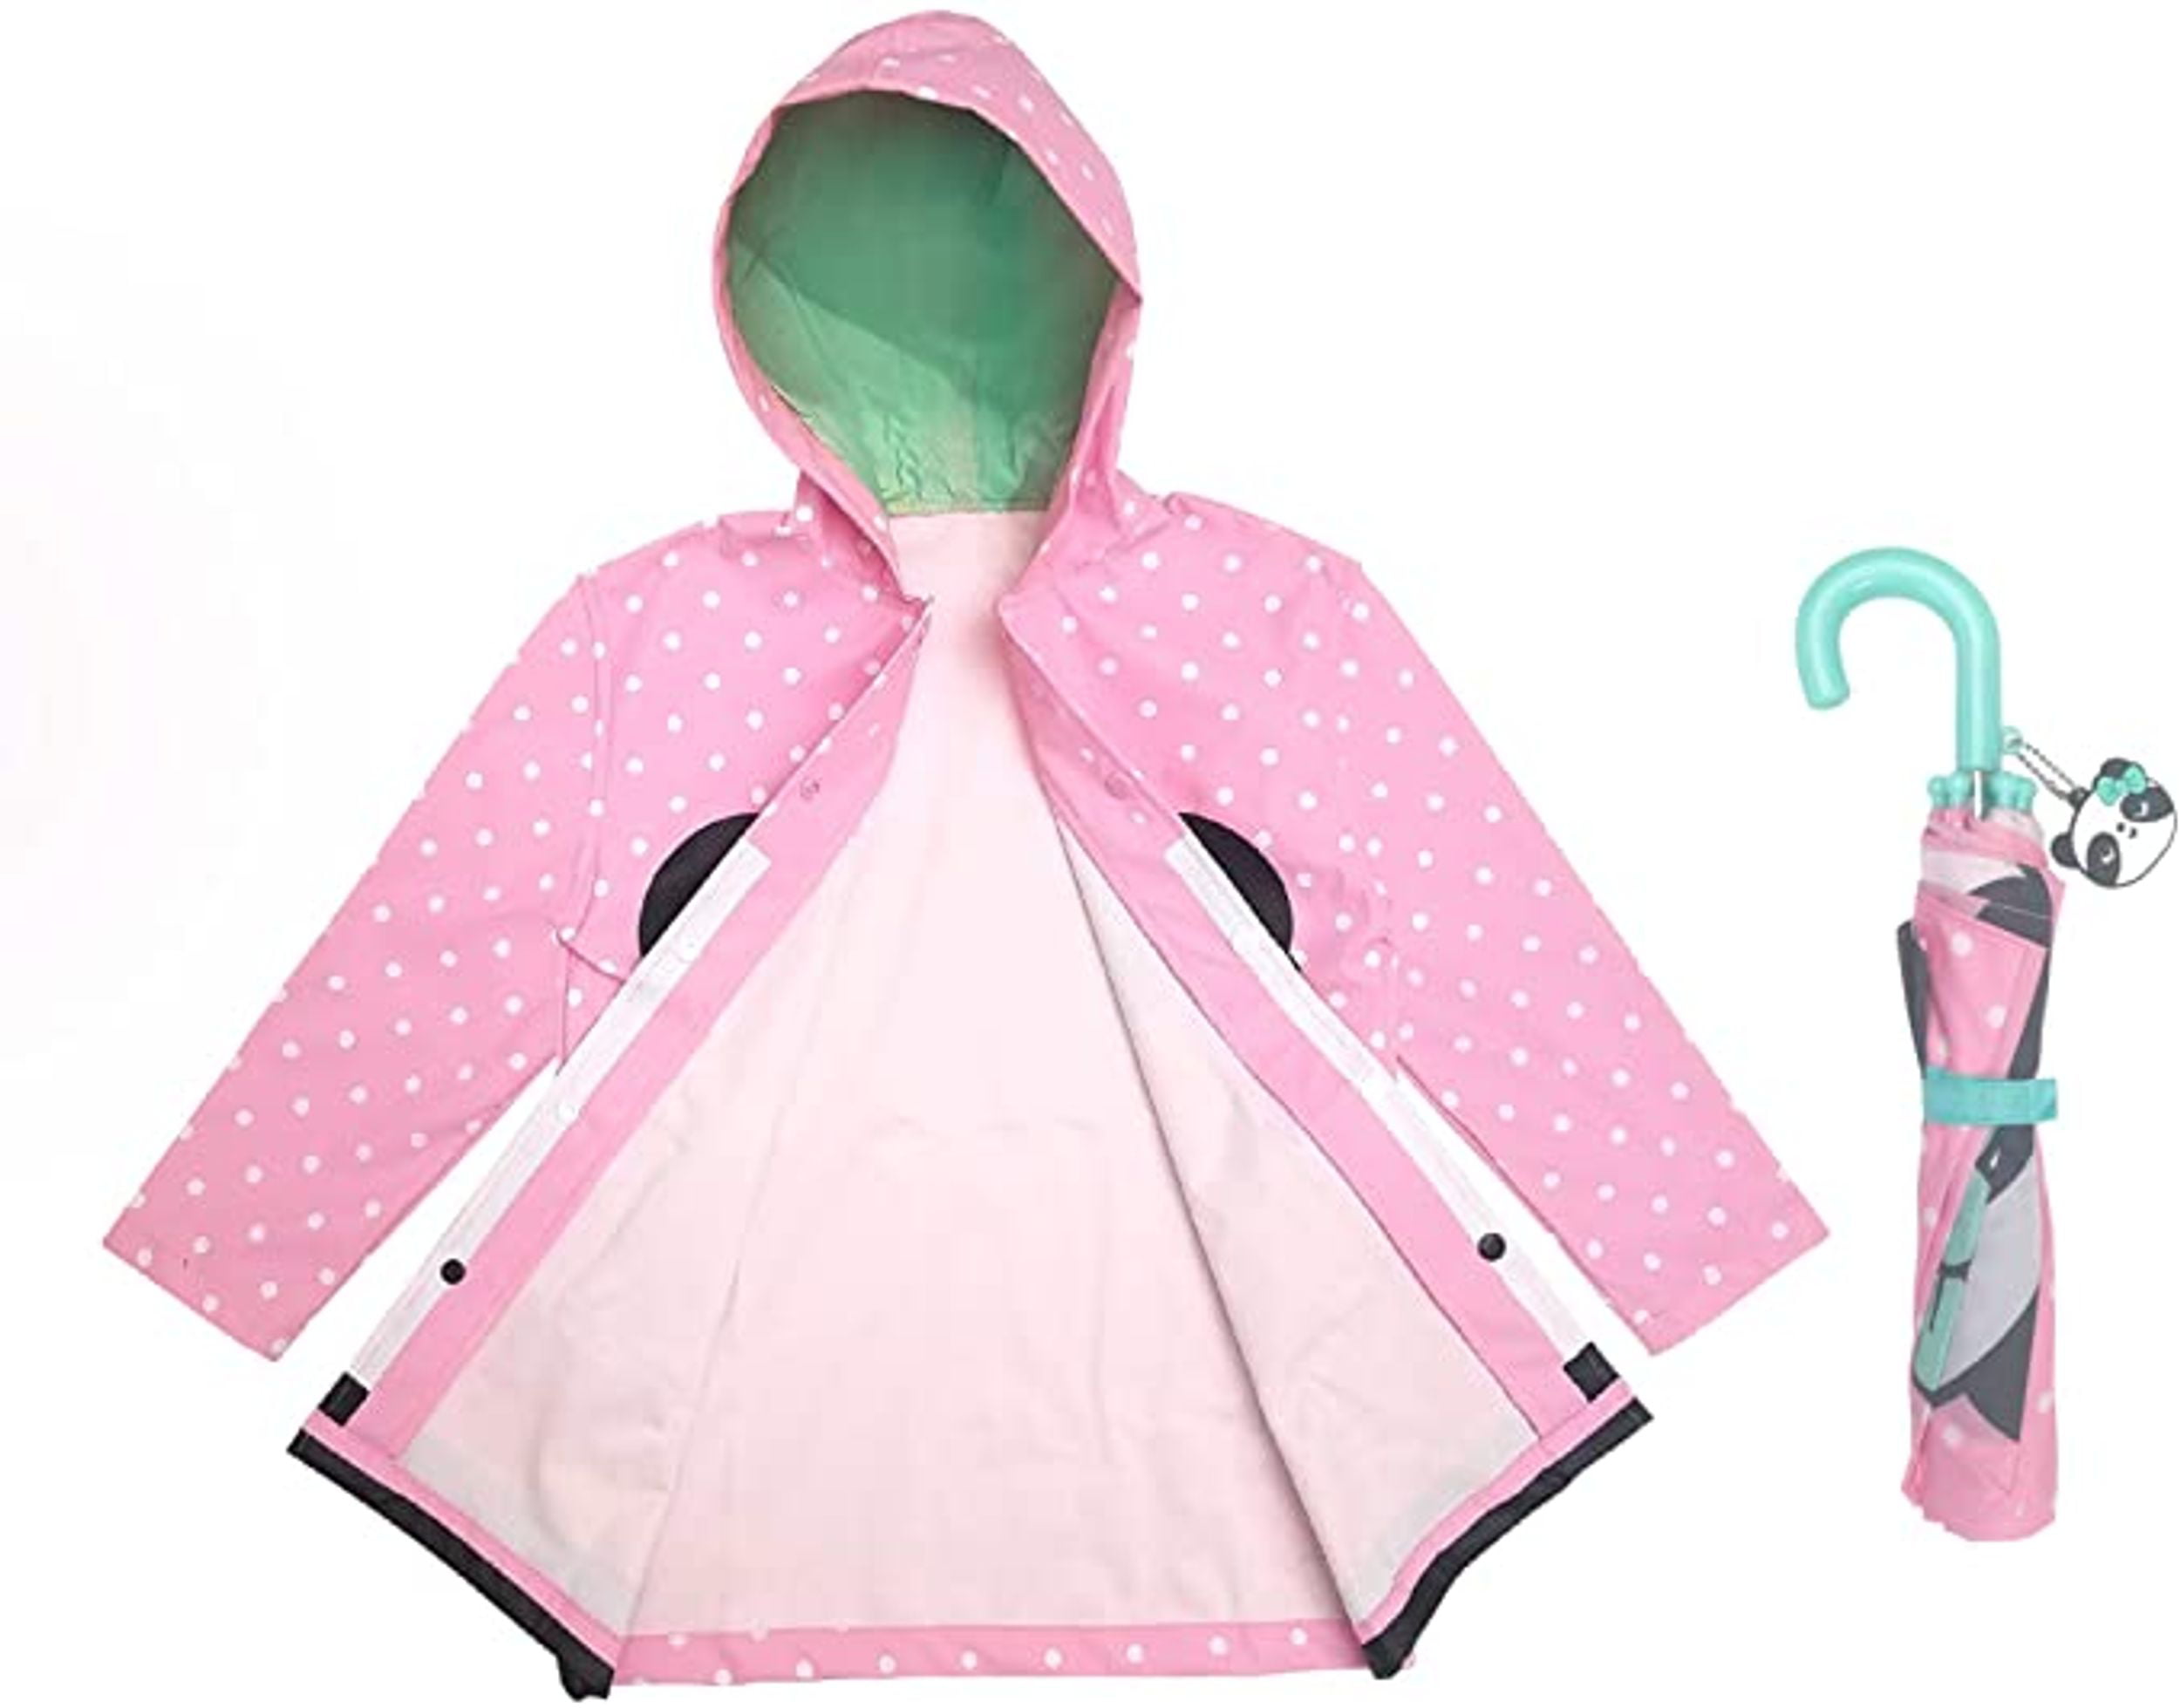 Addie & Tate Umbrella and Raincoat Set for Kids Ages 5-7 - Panda